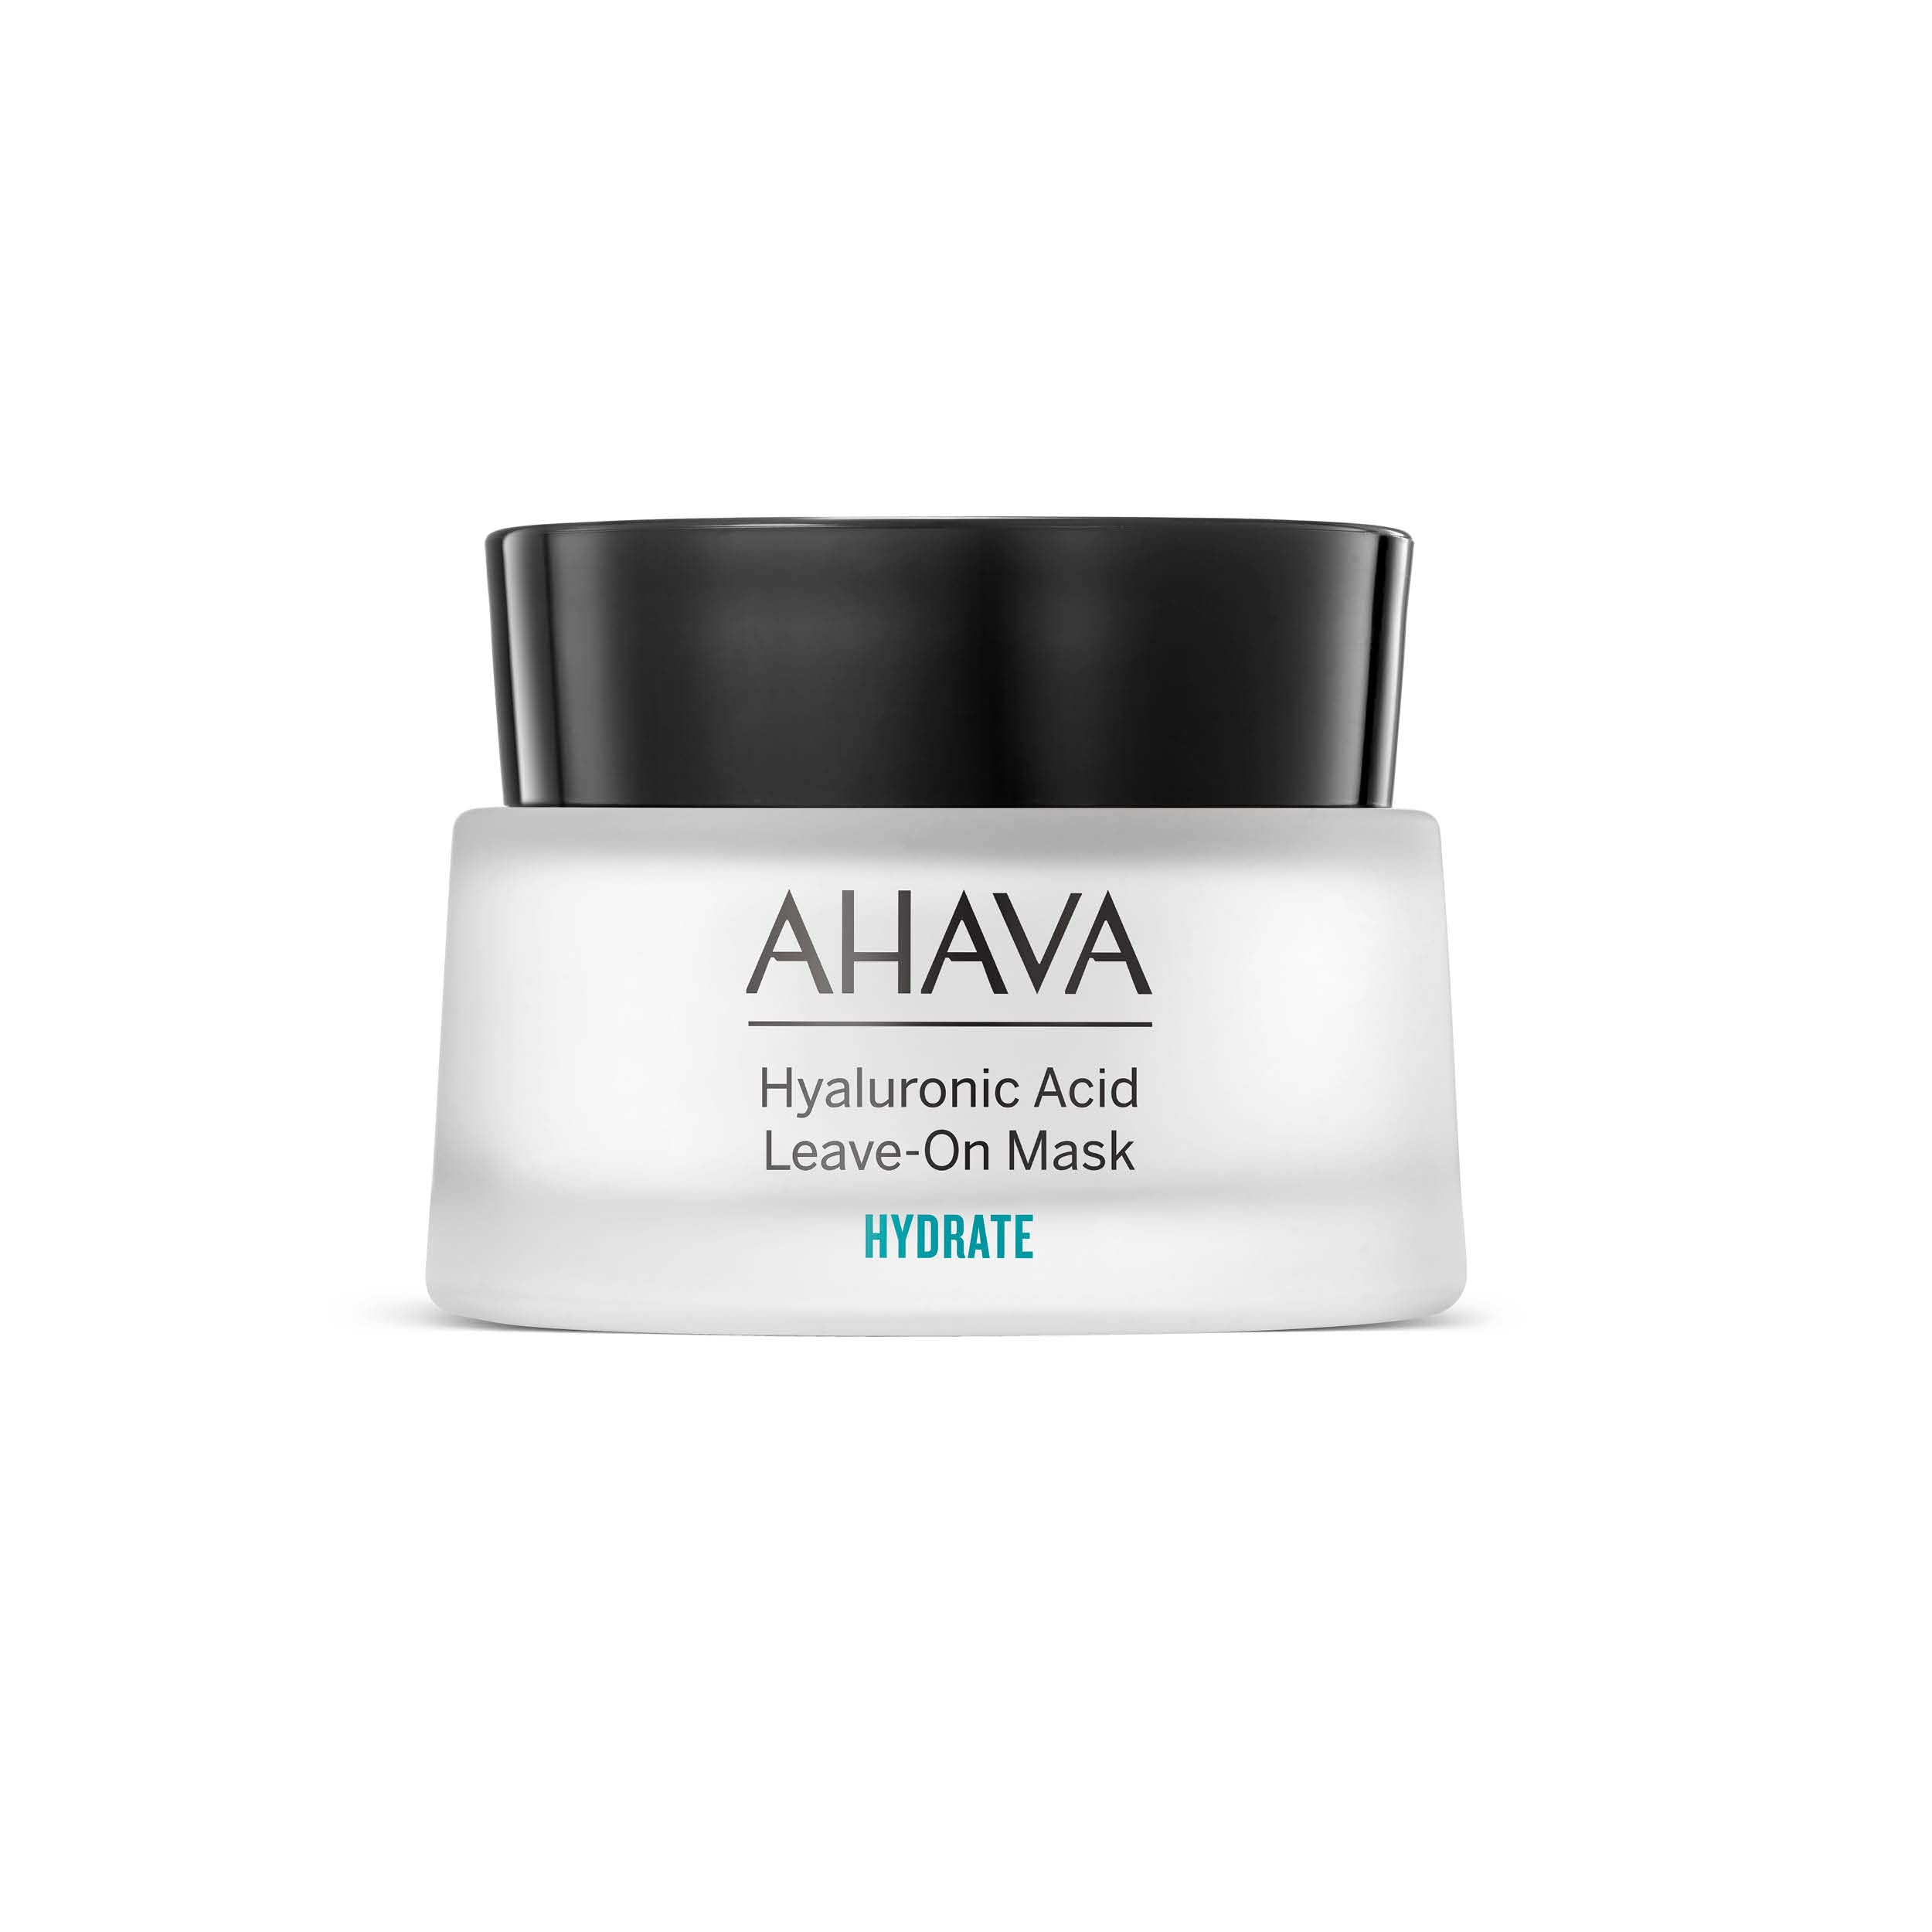 AHAVA Hyaluronic Acid Leave-On Mask - Rich, Hydrating Mask, Upsurge Skin's Moisture, Provides Instant Softness, Smoothness and Suppleness - 100ml